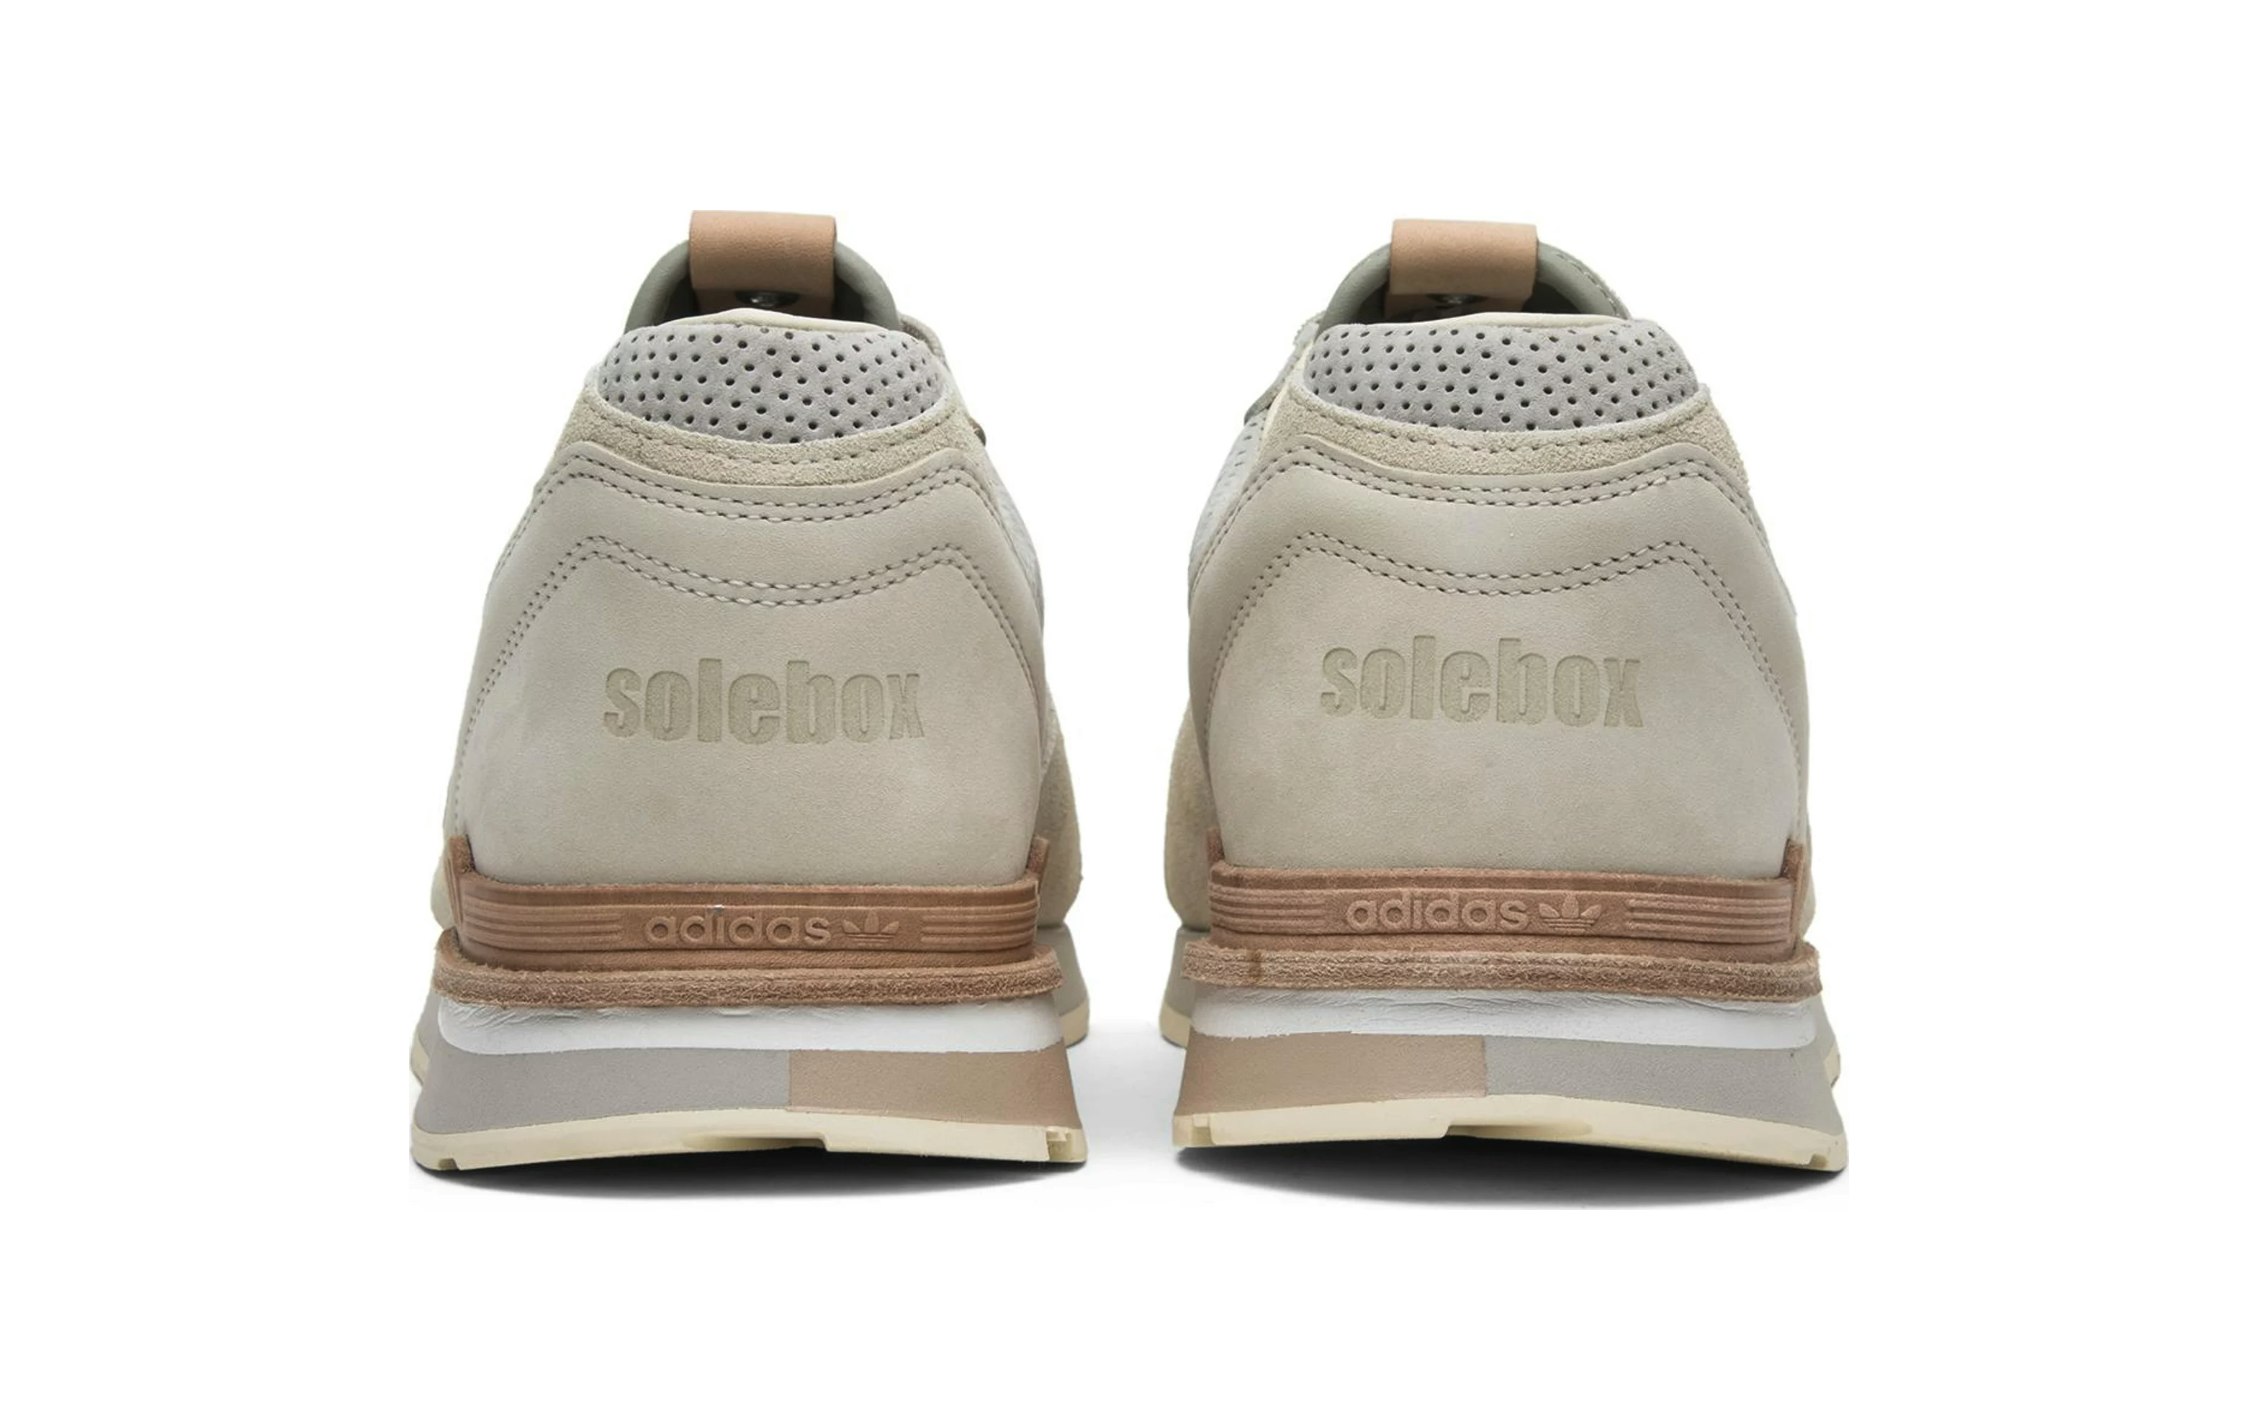 Solebox x adidas Quesence "Italian Leathers"